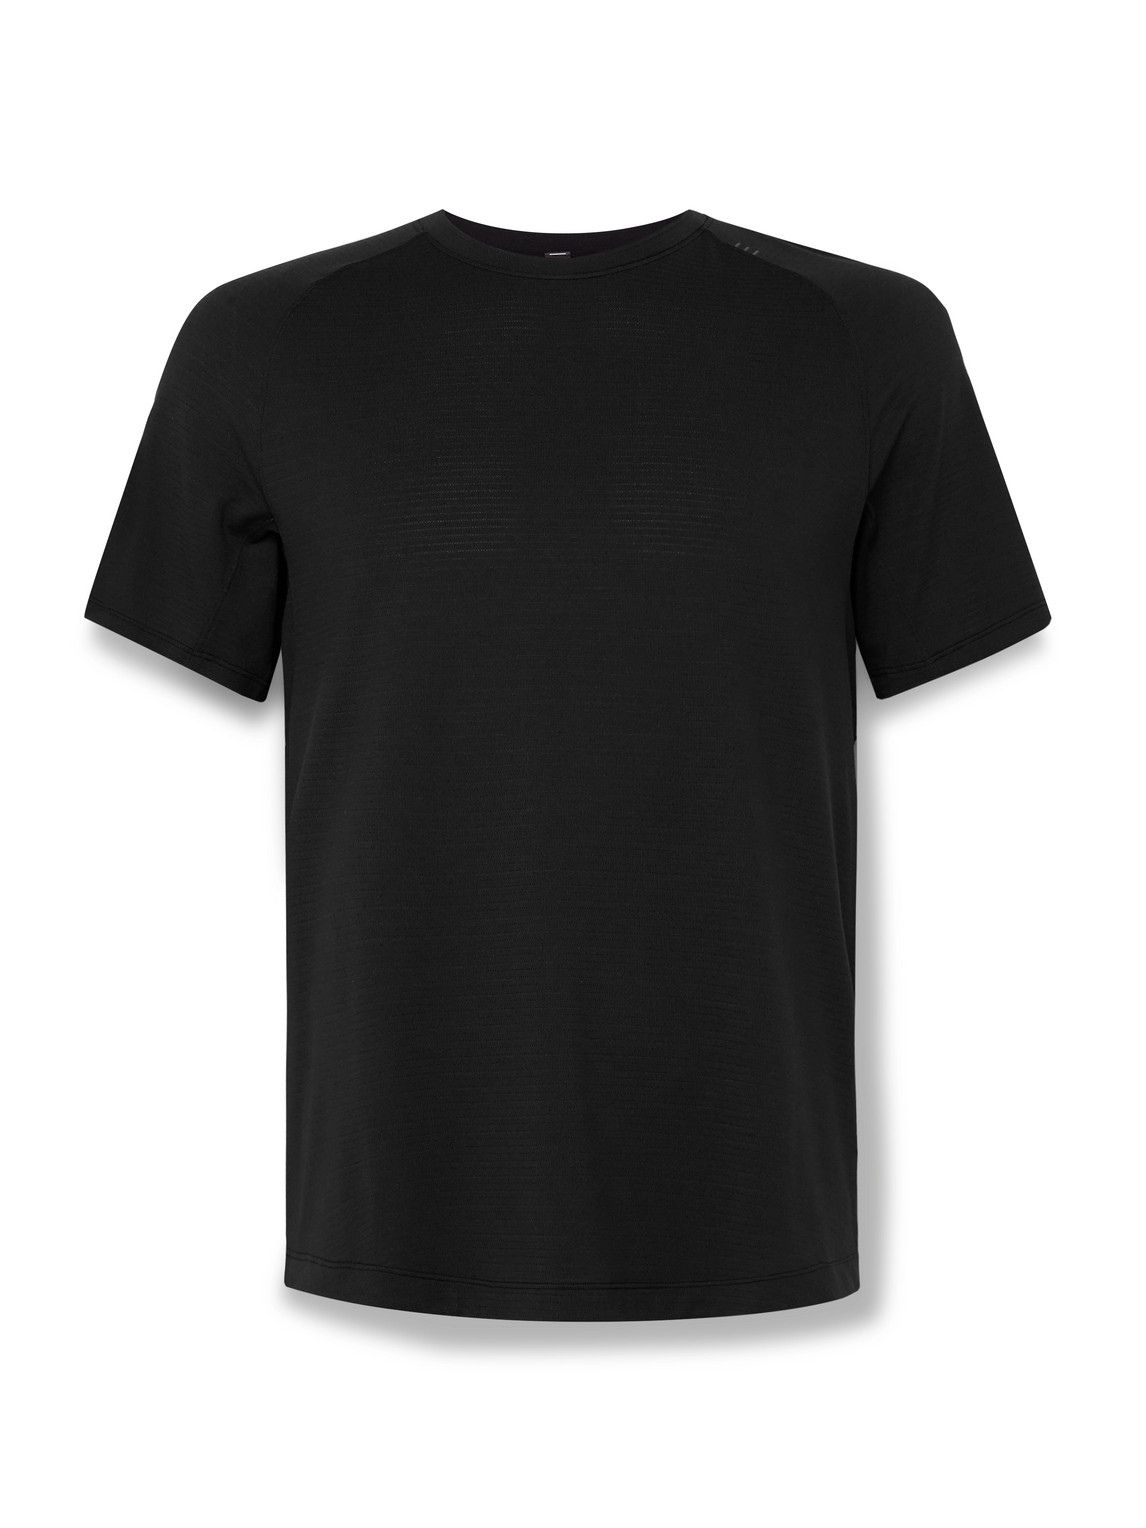 Lululemon - License to Train Stretch Recycled-Mesh T-Shirt - Men - Black - L von Lululemon